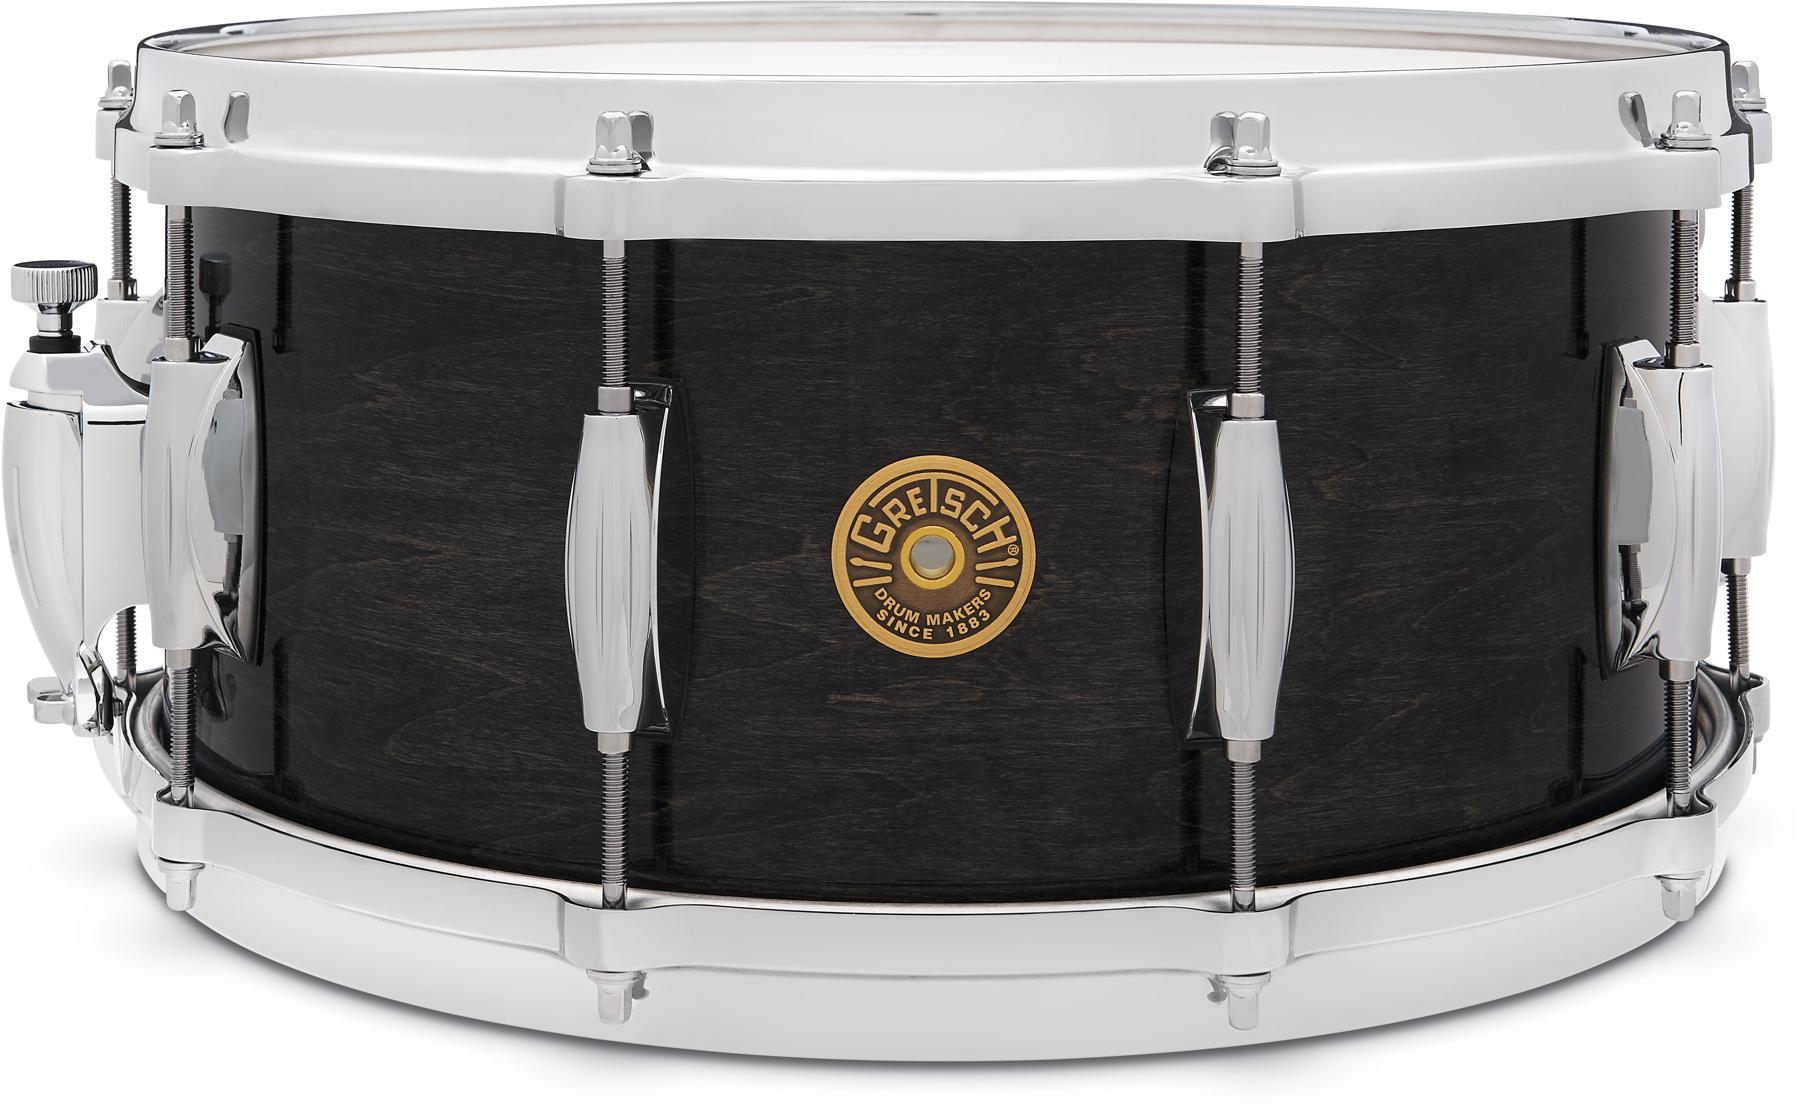 Gretsch Drums USA Custom Ridgeland Snare Drum - 6.5-inch x 14-inch, Ebony Gloss Lacquer